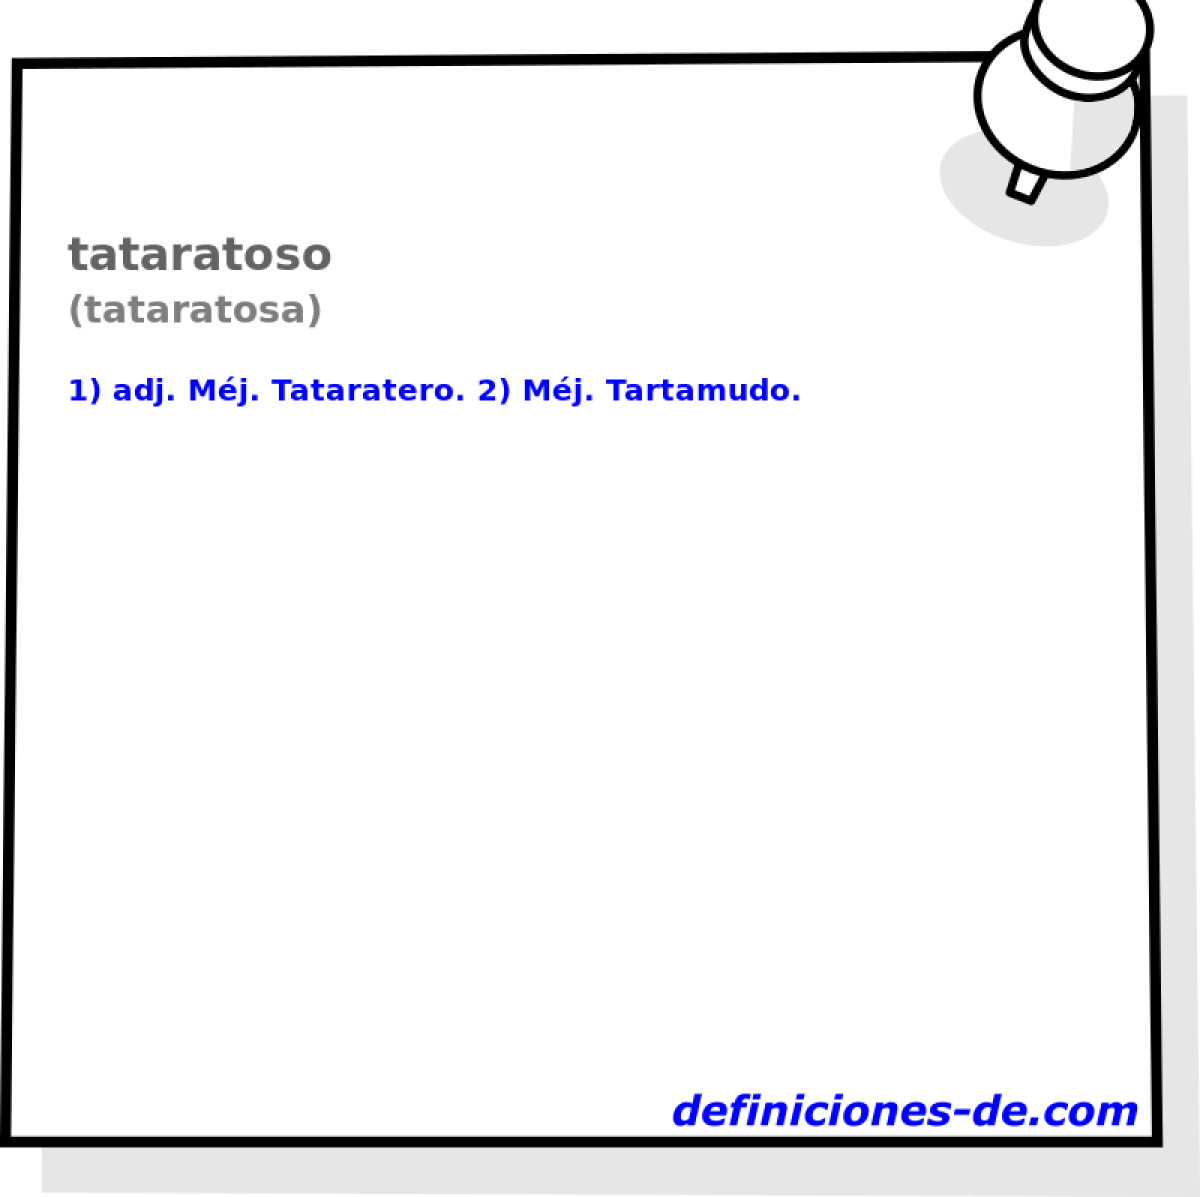 tataratoso (tataratosa)